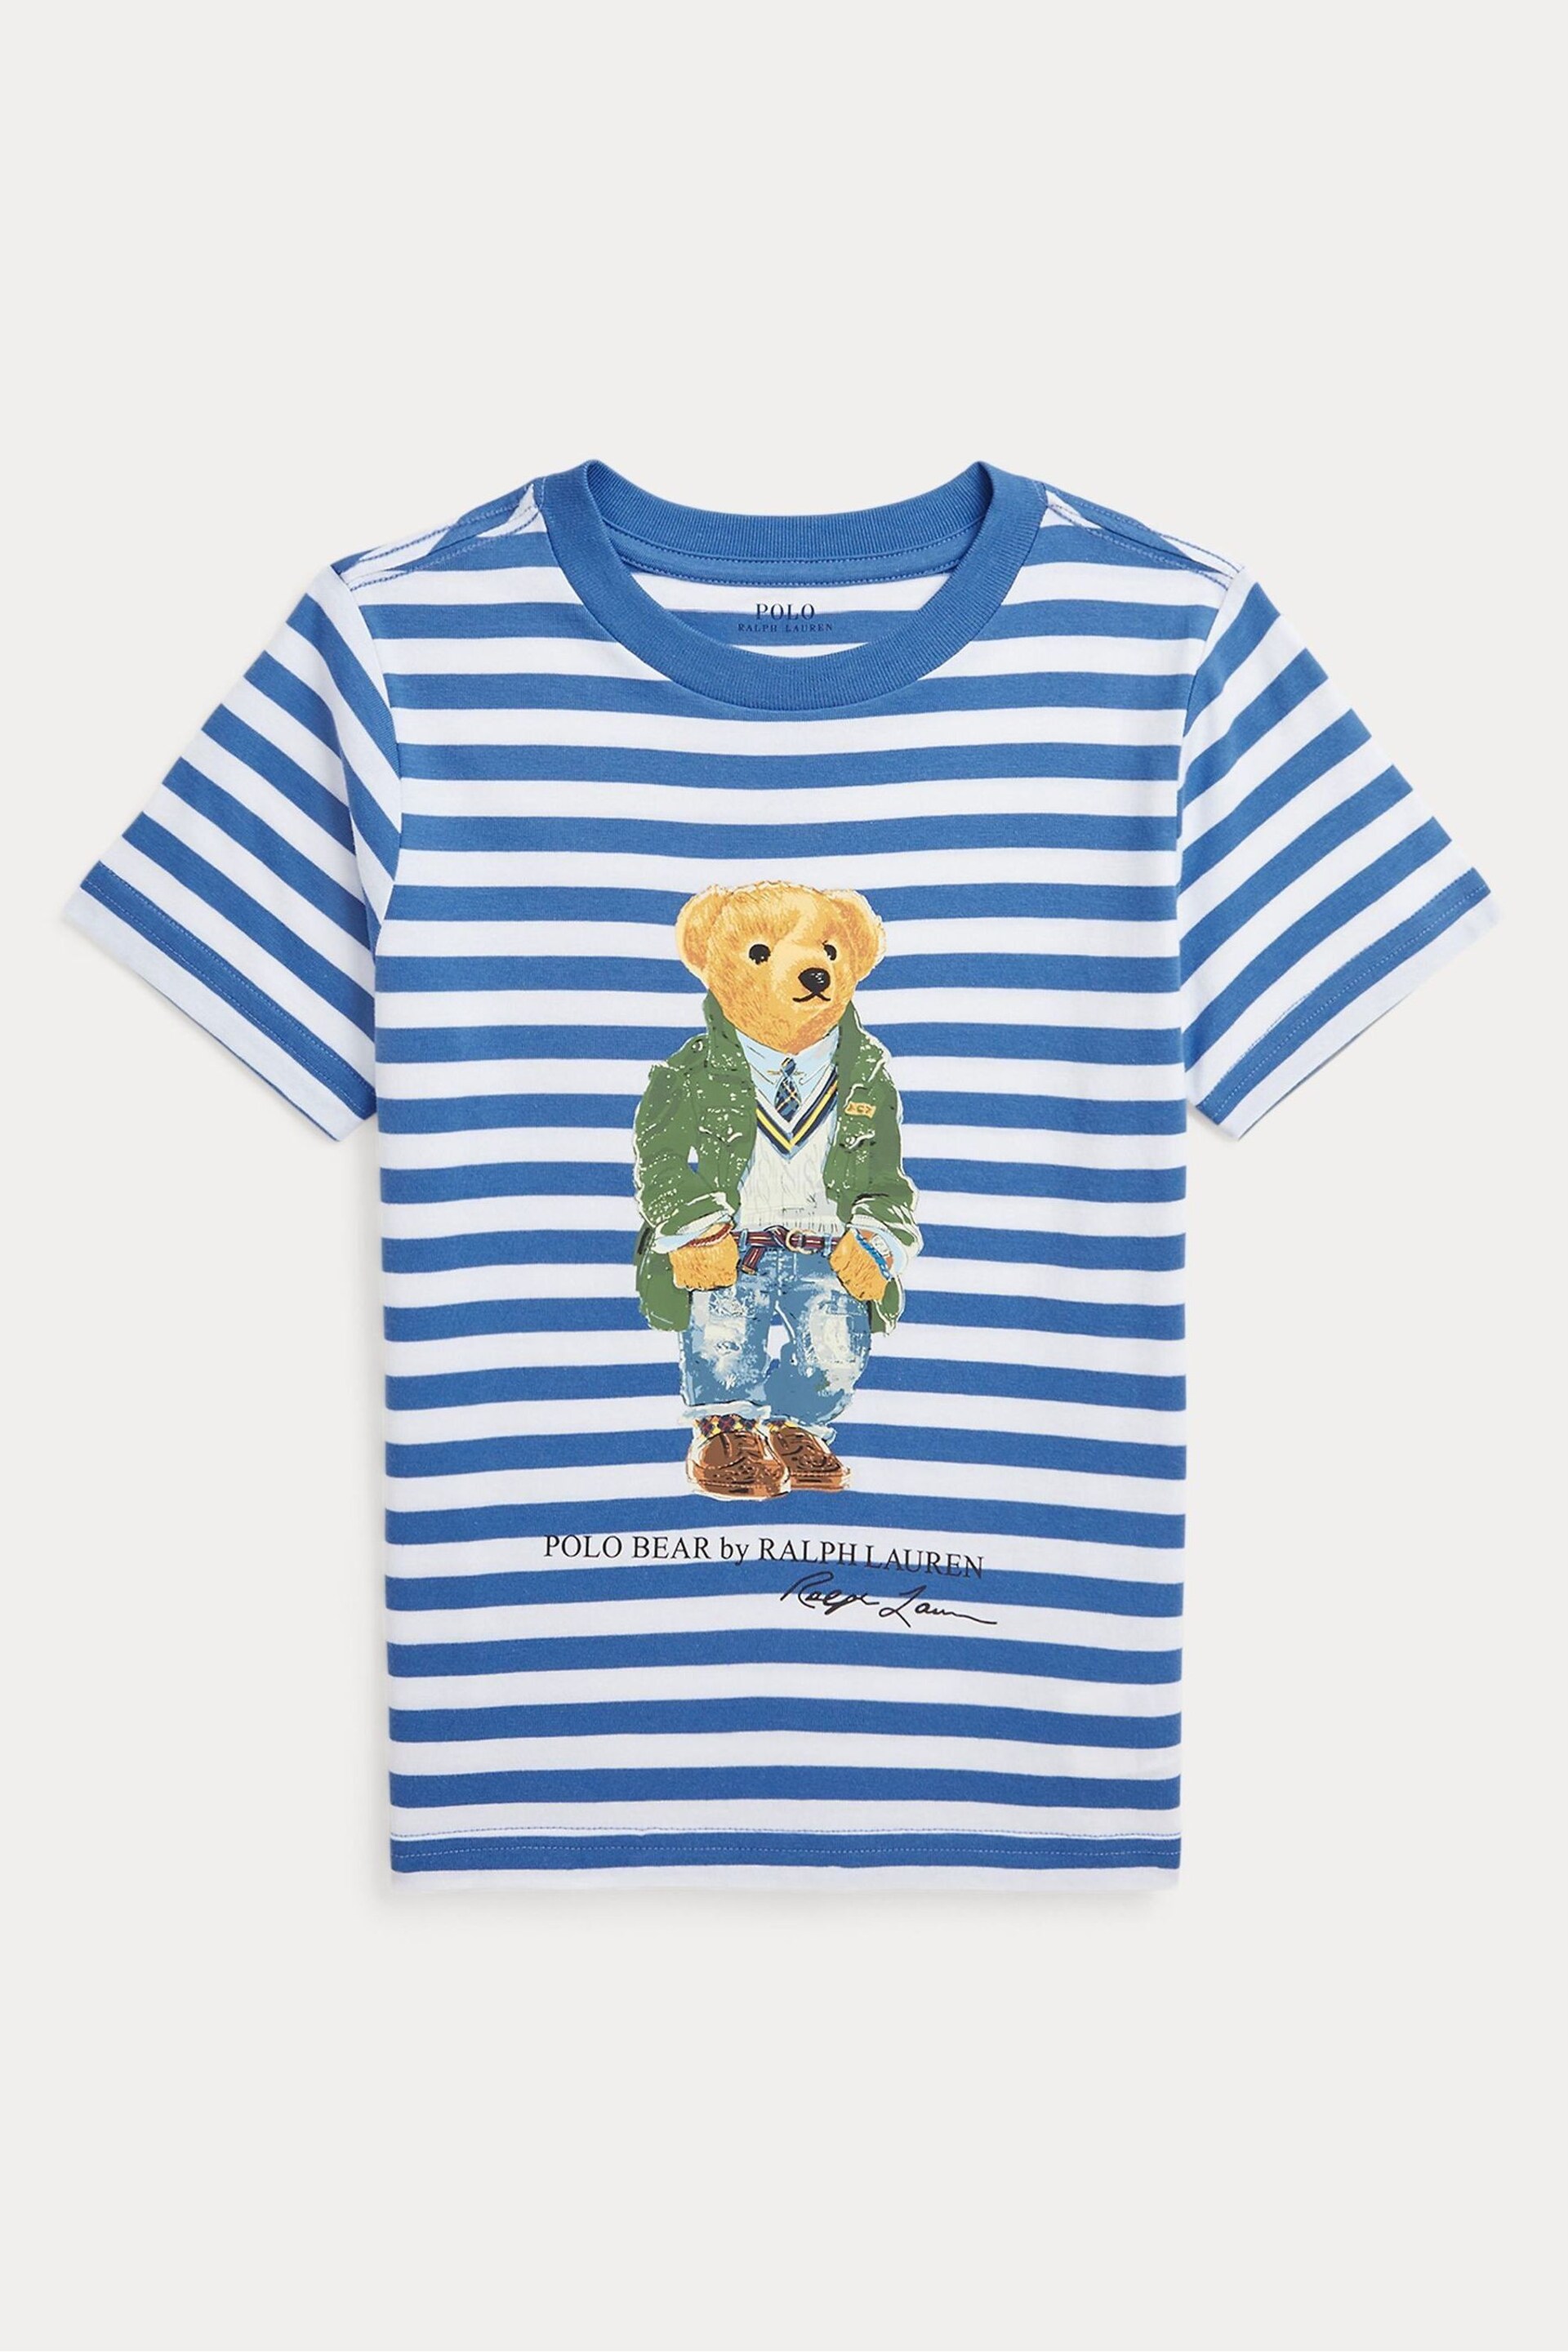 Polo Ralph Lauren Boys Blue Striped Polo Bear Cotton Jersey T-Shirt - Image 1 of 4